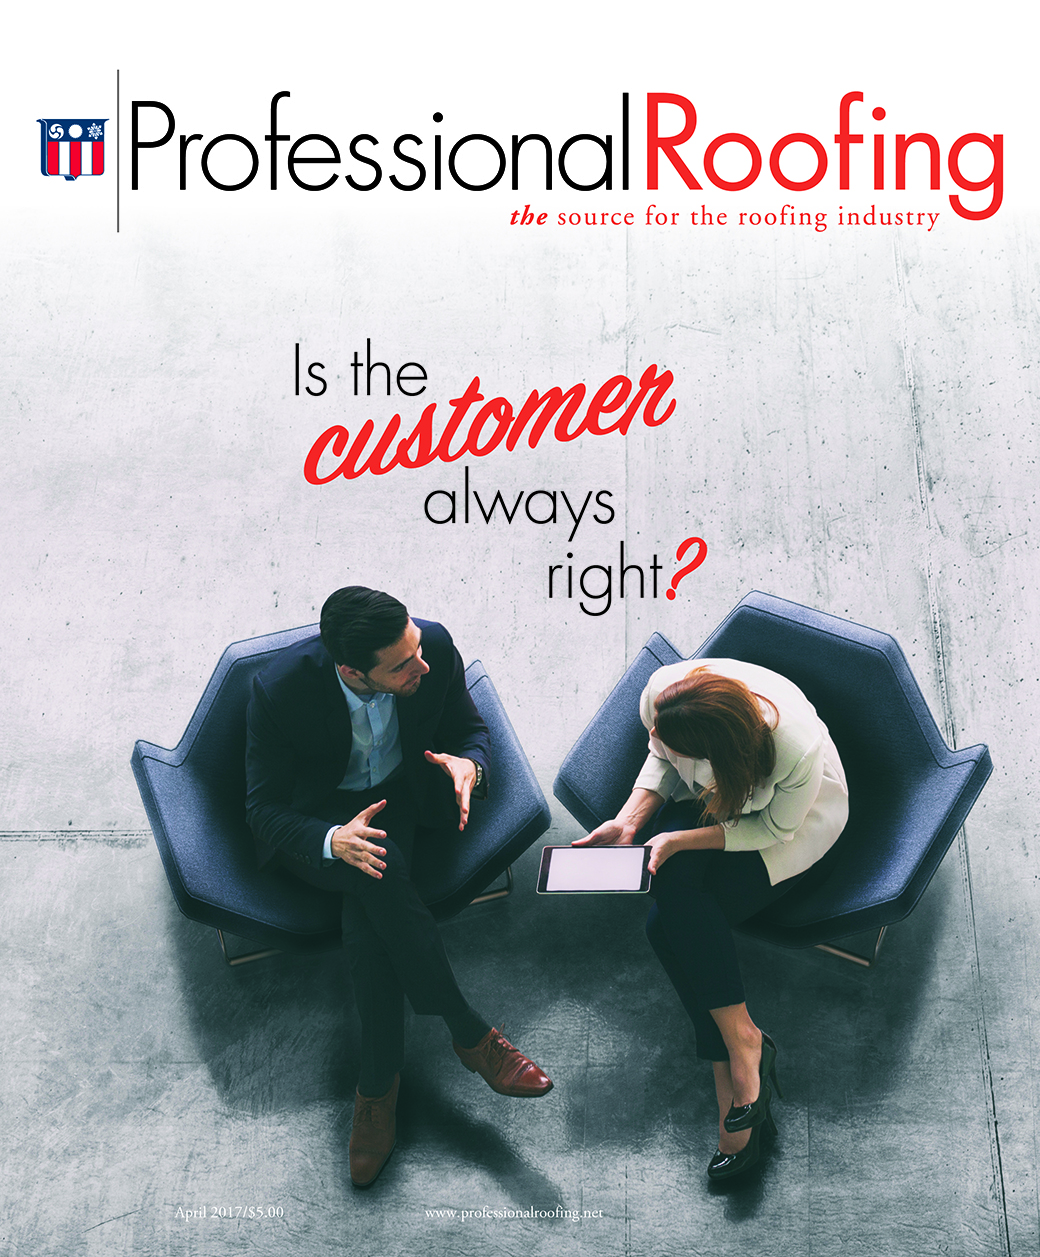 Professional Roofing Magazine 4/1/2017